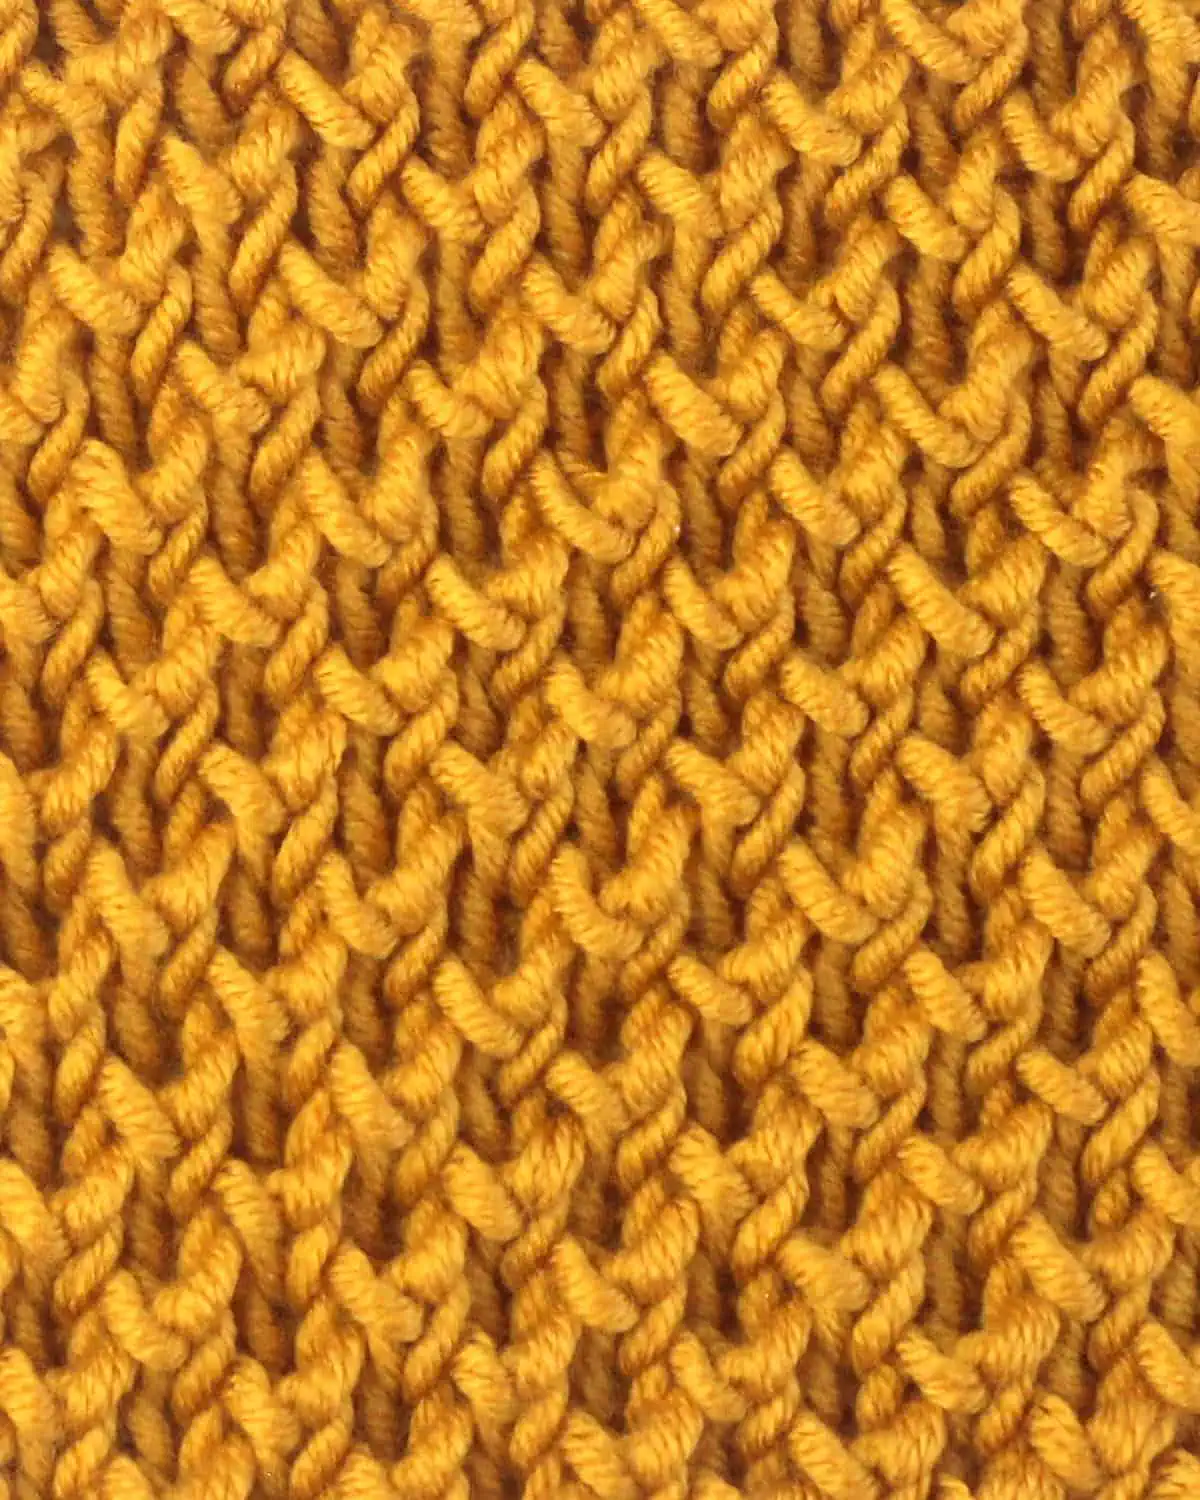 Bee stitch brioche knit stitch pattern in yellow colored yarn.